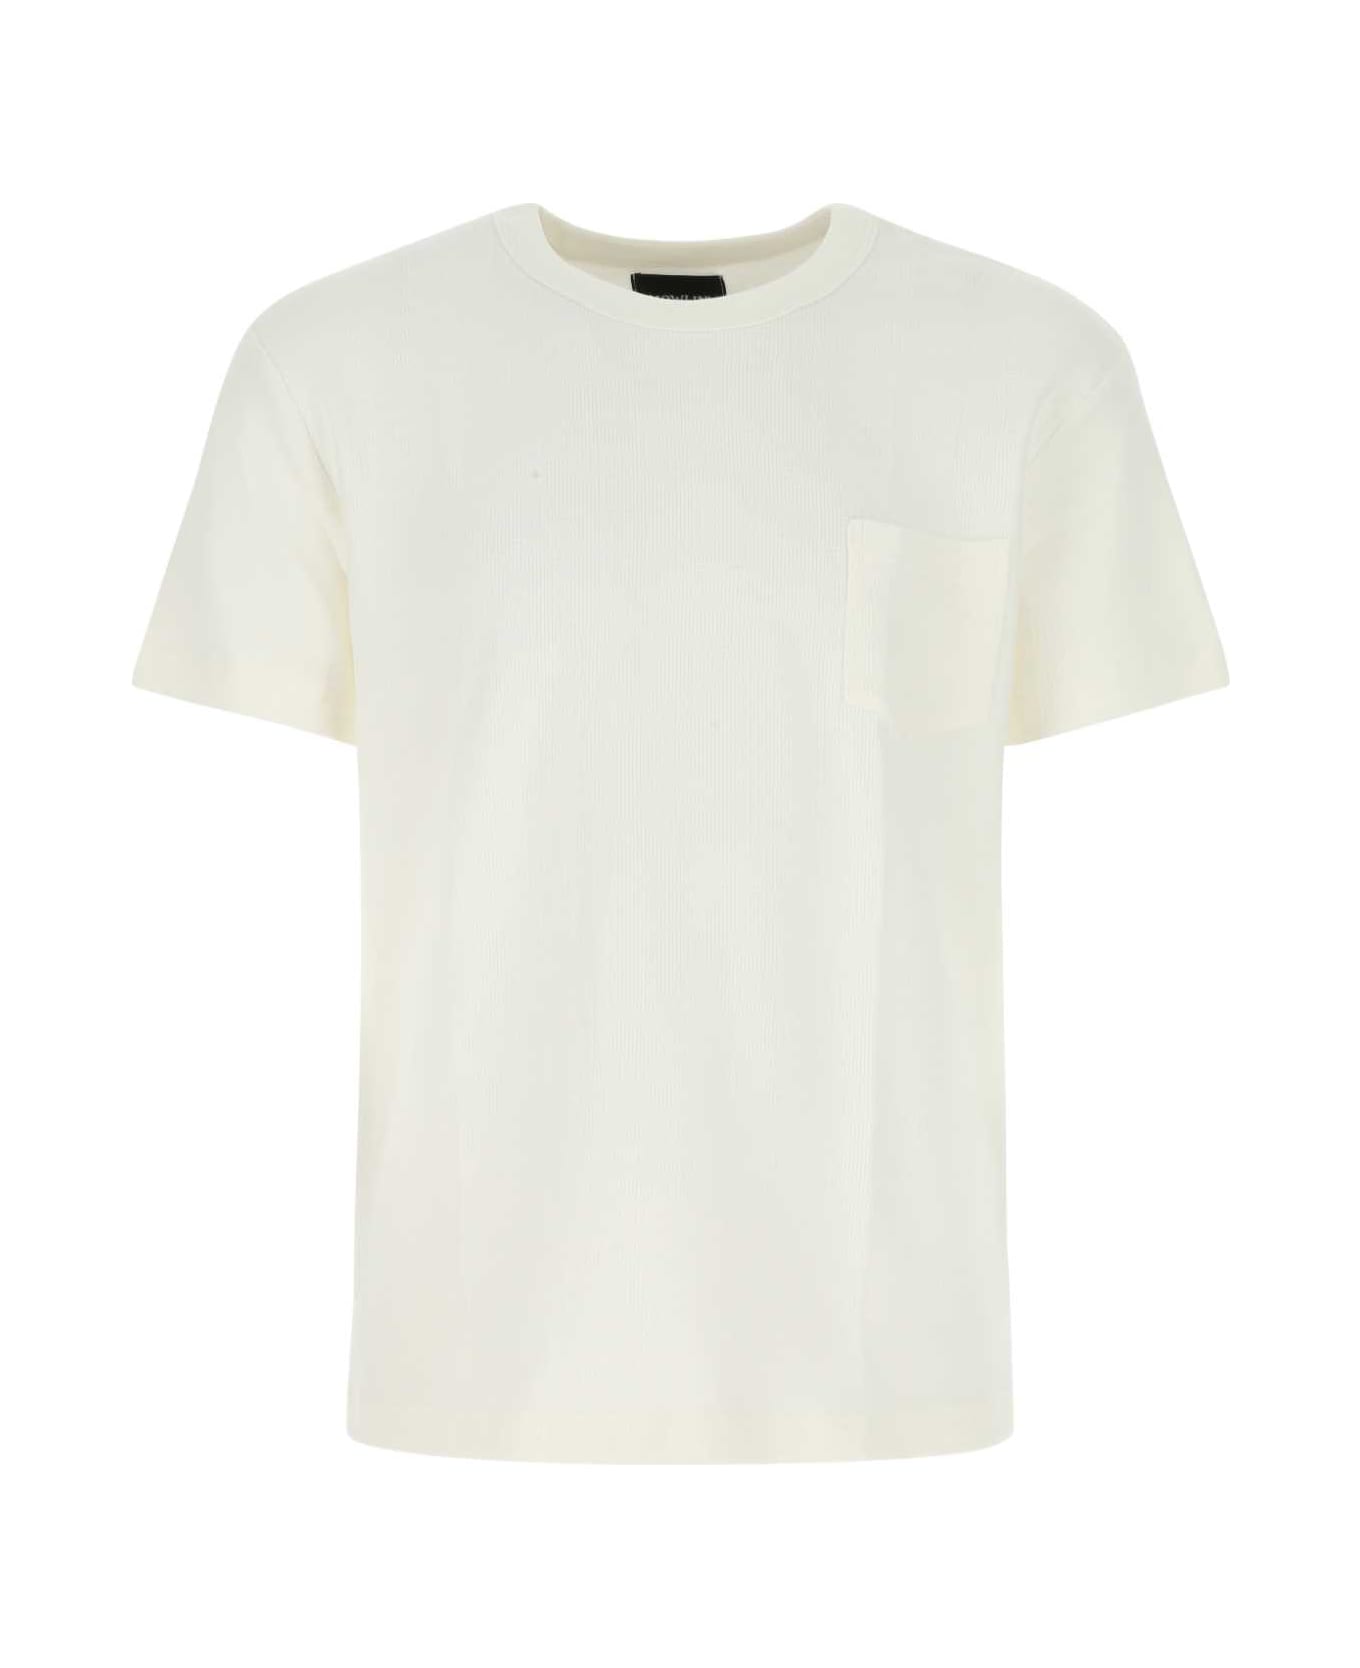 Howlin White Cotton T-shirt - ECRU